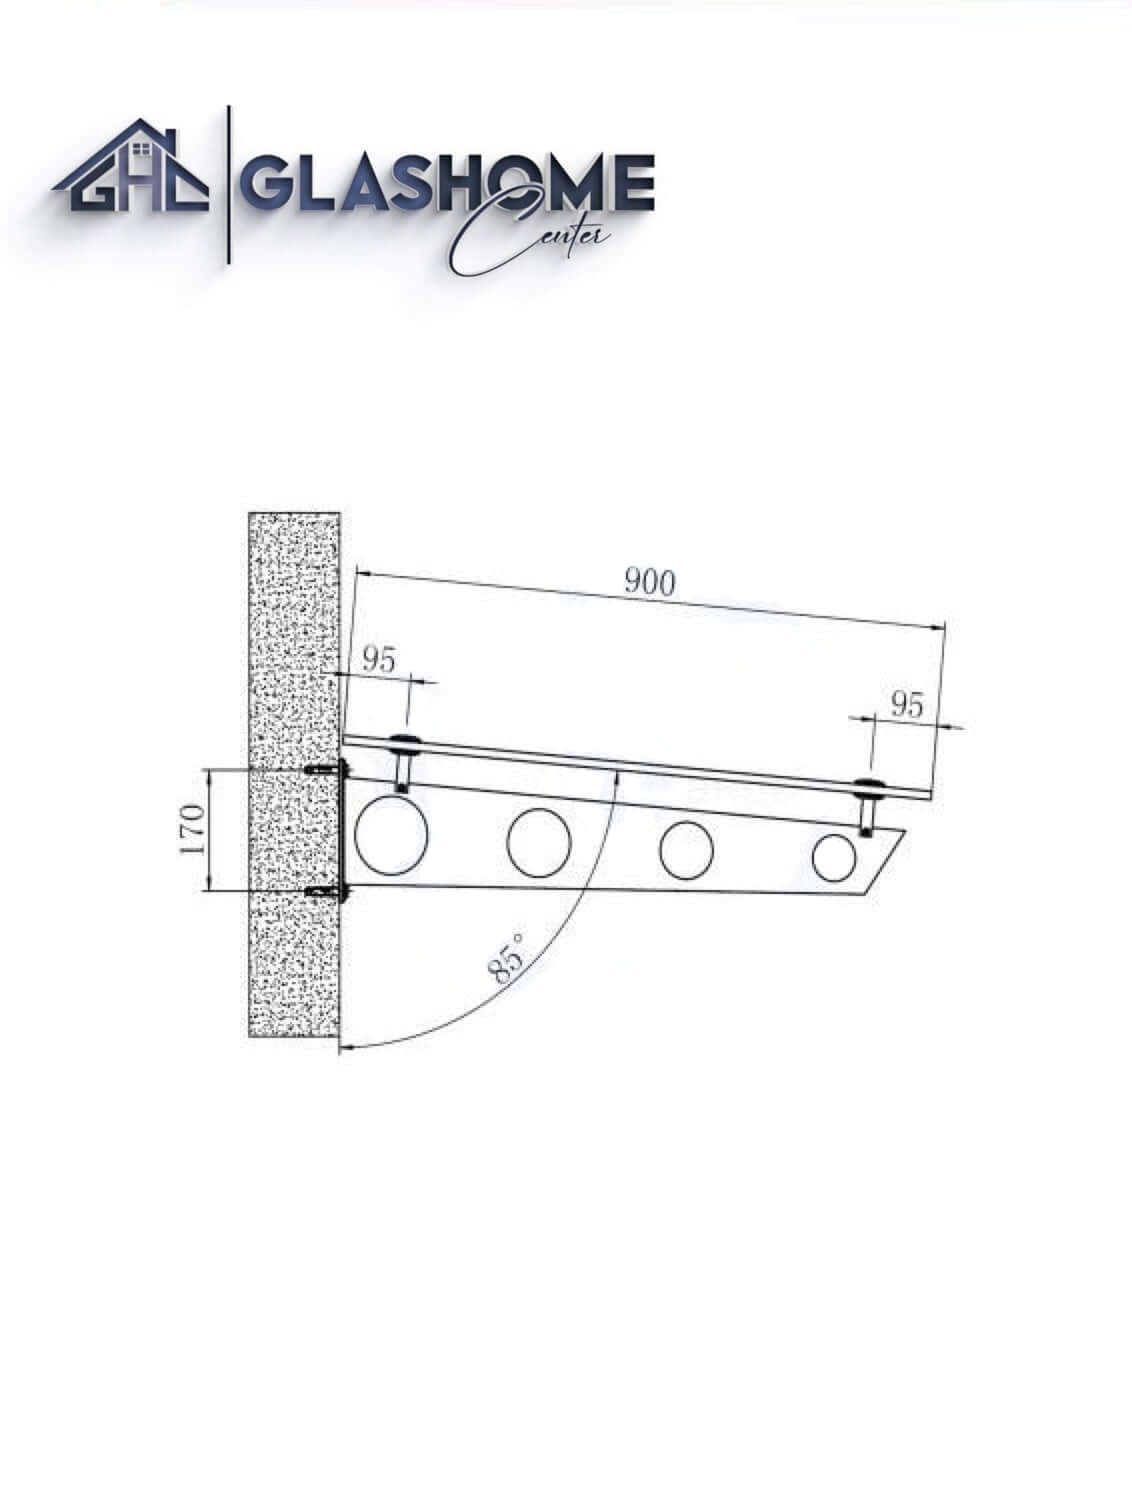 GlasHomeCenter - glass canopy - Clear glass - 200x90cm - 13.1mm VSG - incl. 2 Edelstahlhalterungen Variant "Stockholm"